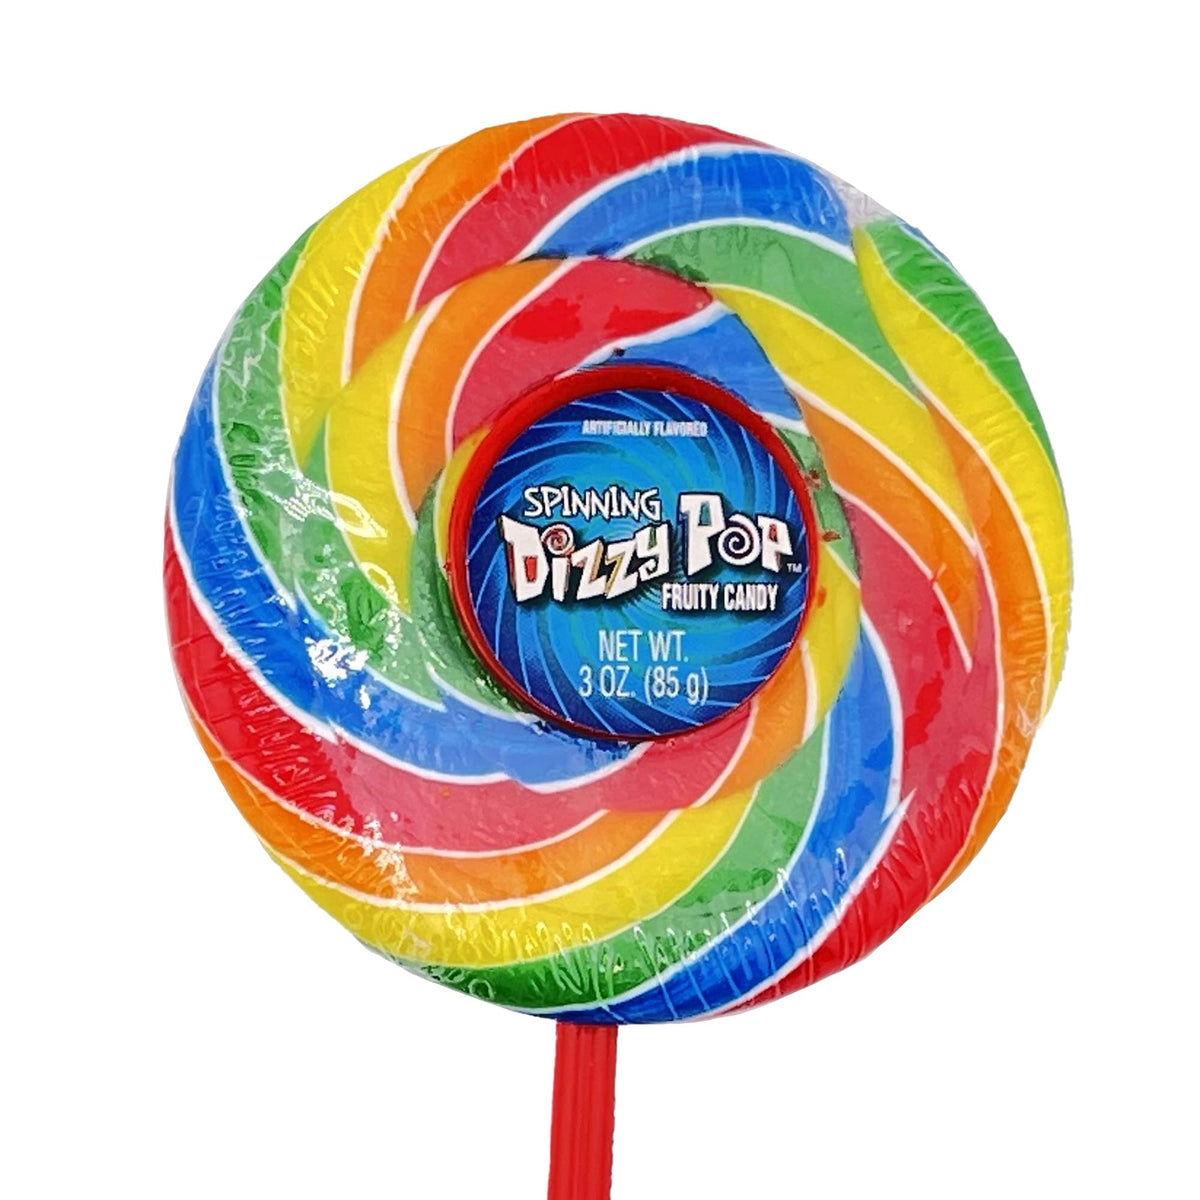 Bee Spinning Dizzy Pop Fruity Candy 3 oz. Lollipop - 12 / Box - Candy  Favorites